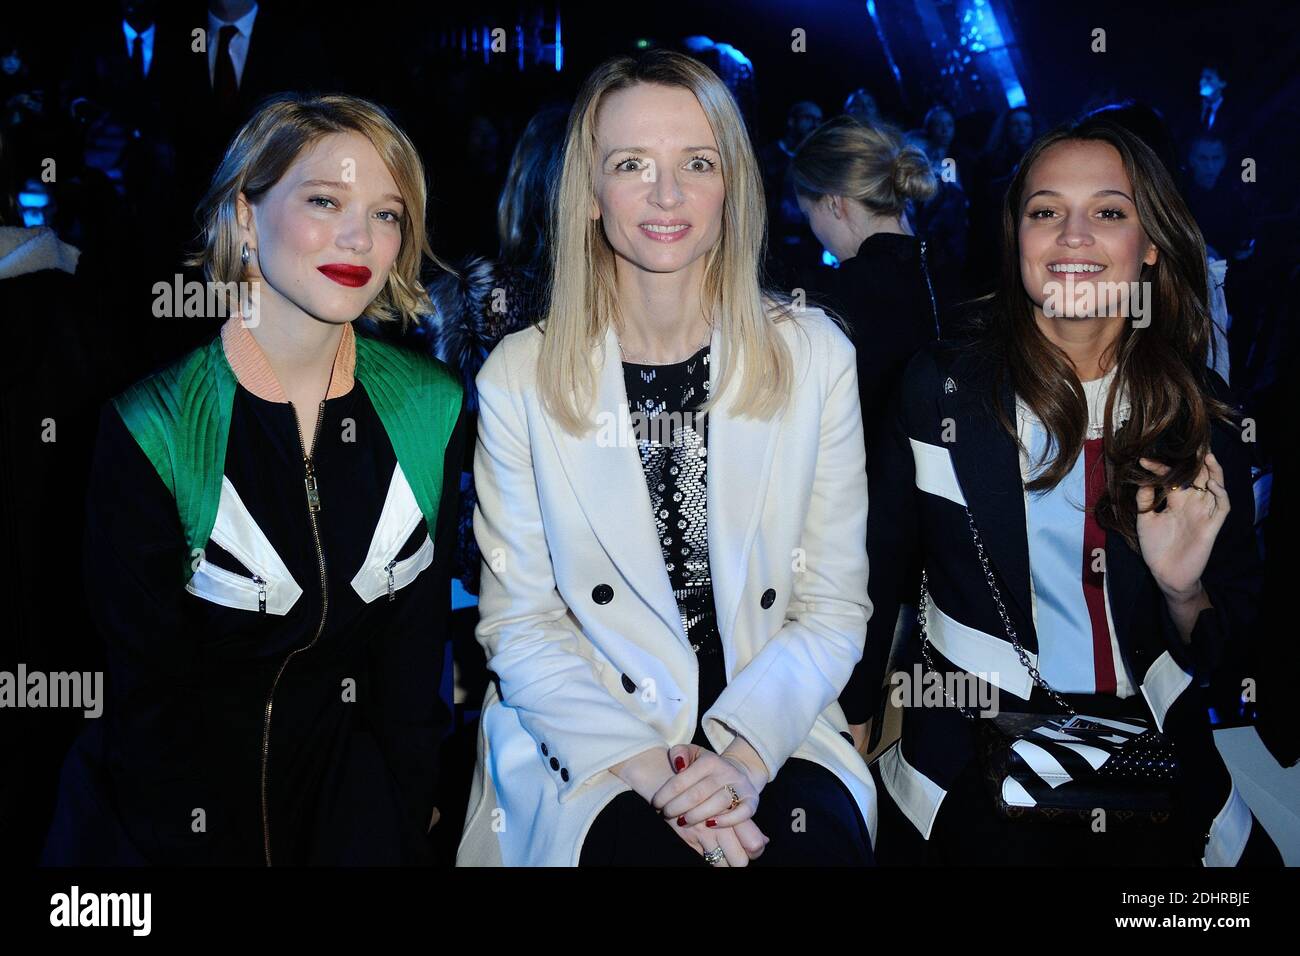 Cannes: Lea Seydoux, Alicia Vikander Glow at Louis Vuitton [PHOTOS